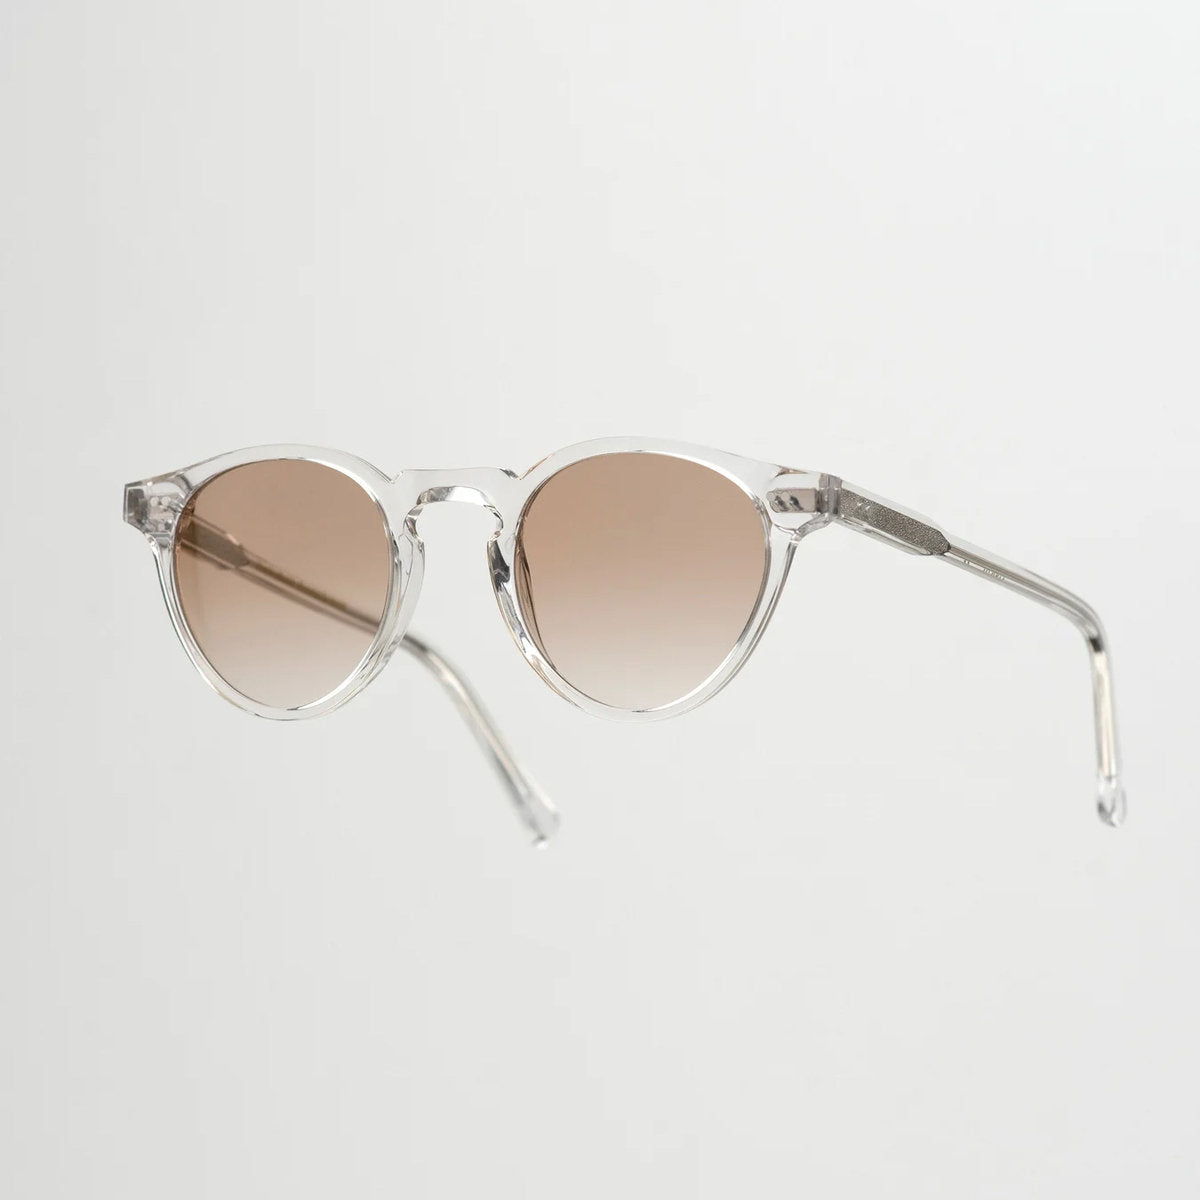 Buy POLAROID Unisex Caravan Sunglasses Crystal Frame, Grey Lens (57) - Pack  of 1 at Amazon.in